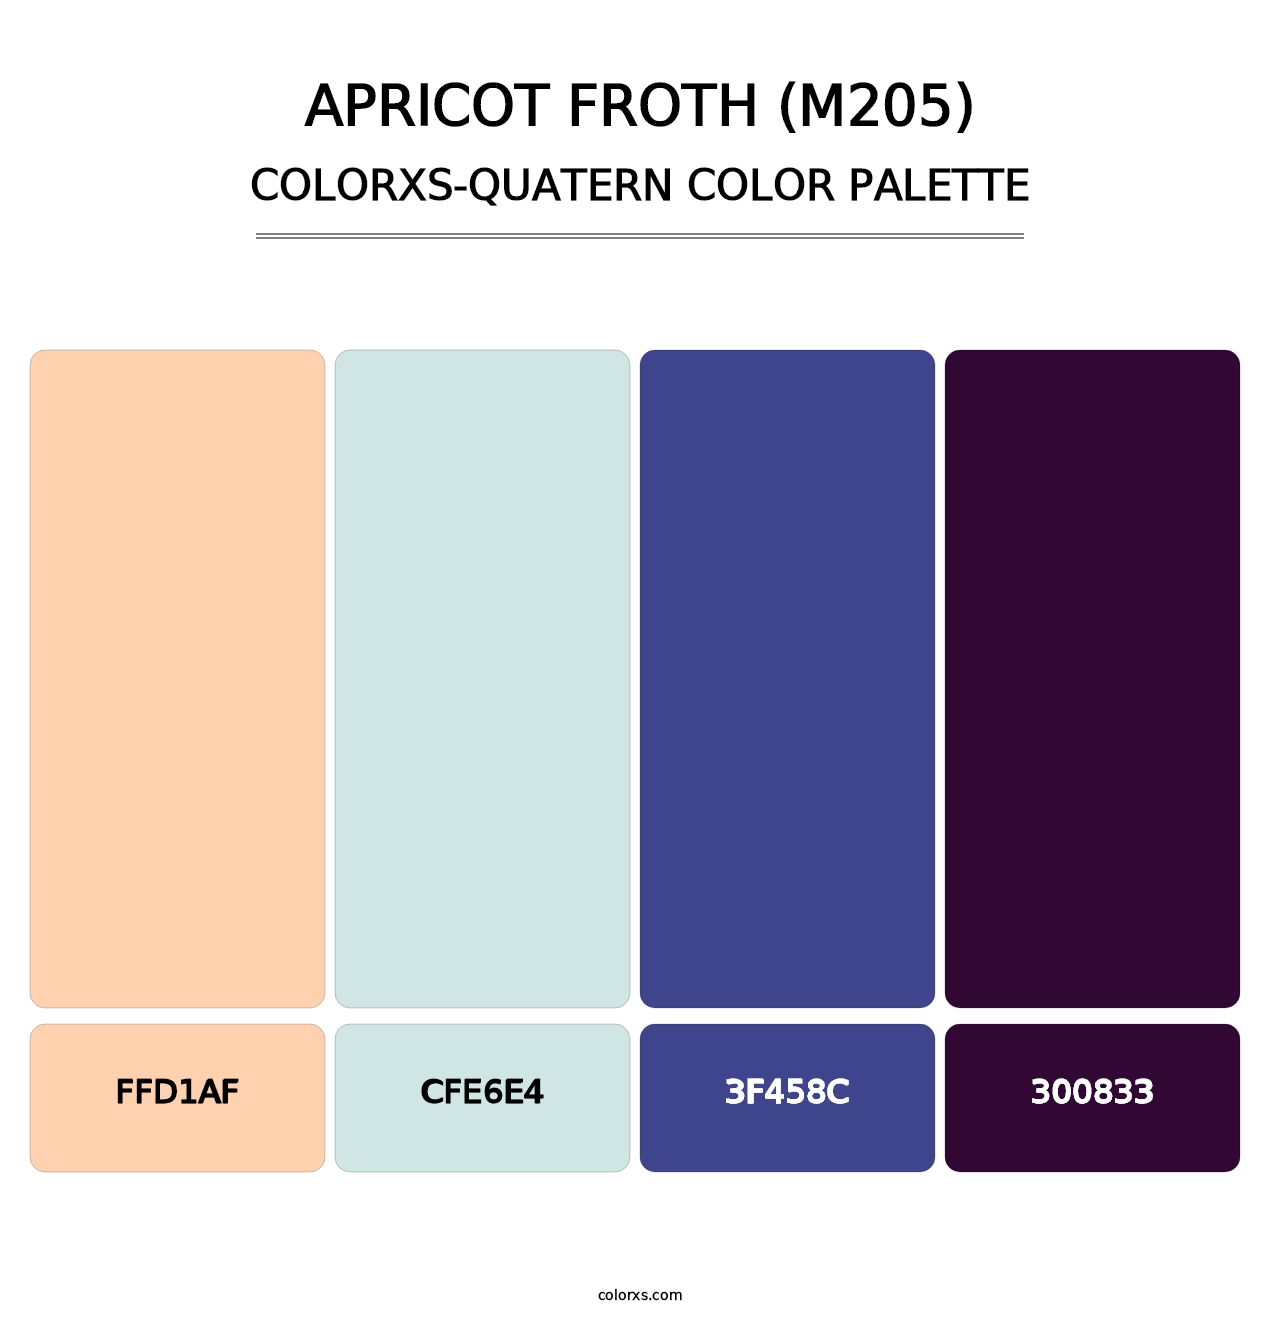 Apricot Froth (M205) - Colorxs Quatern Palette